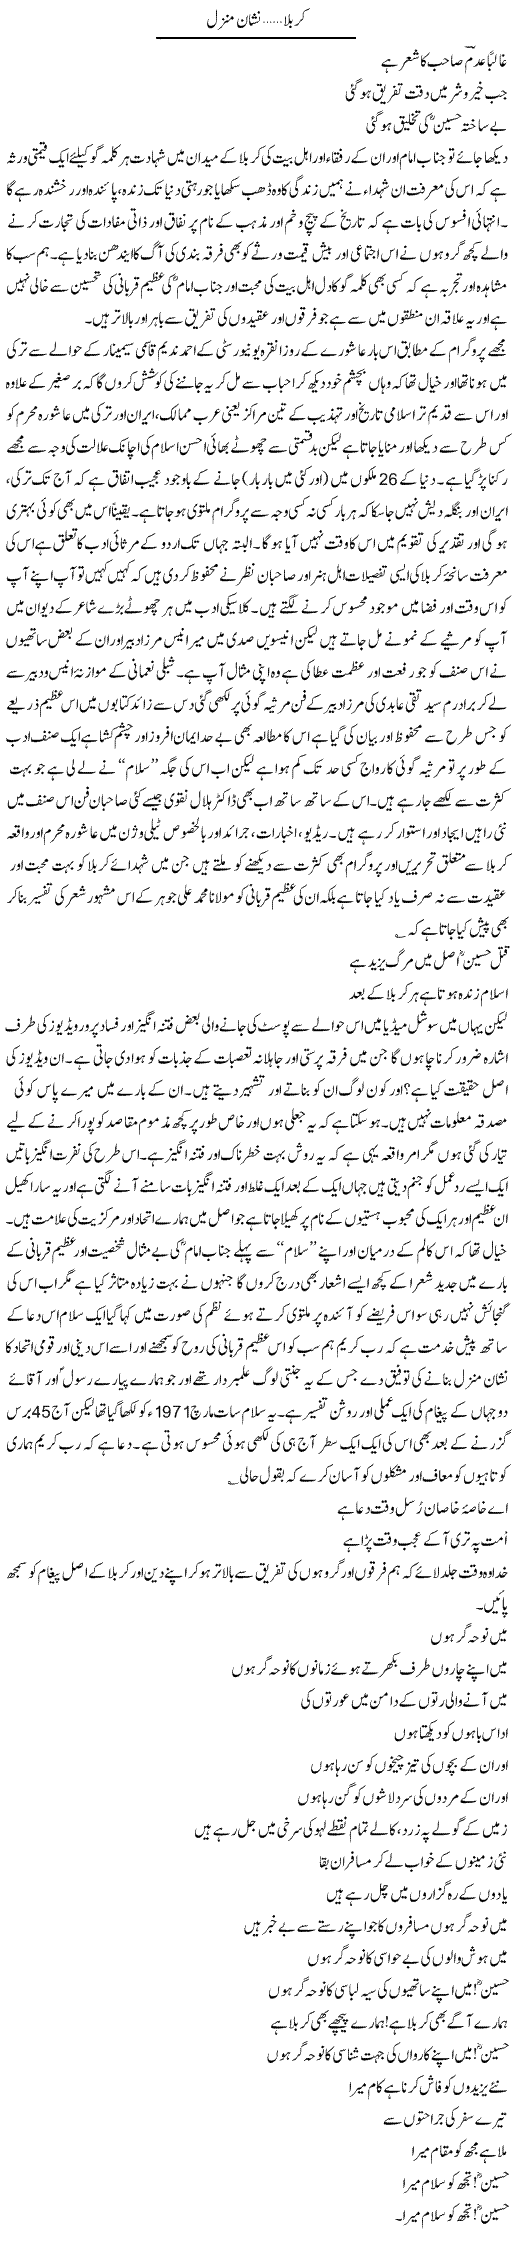 Karbala, nishan e manzil | Amjad Islam Amjad | Daily Urdu Columns